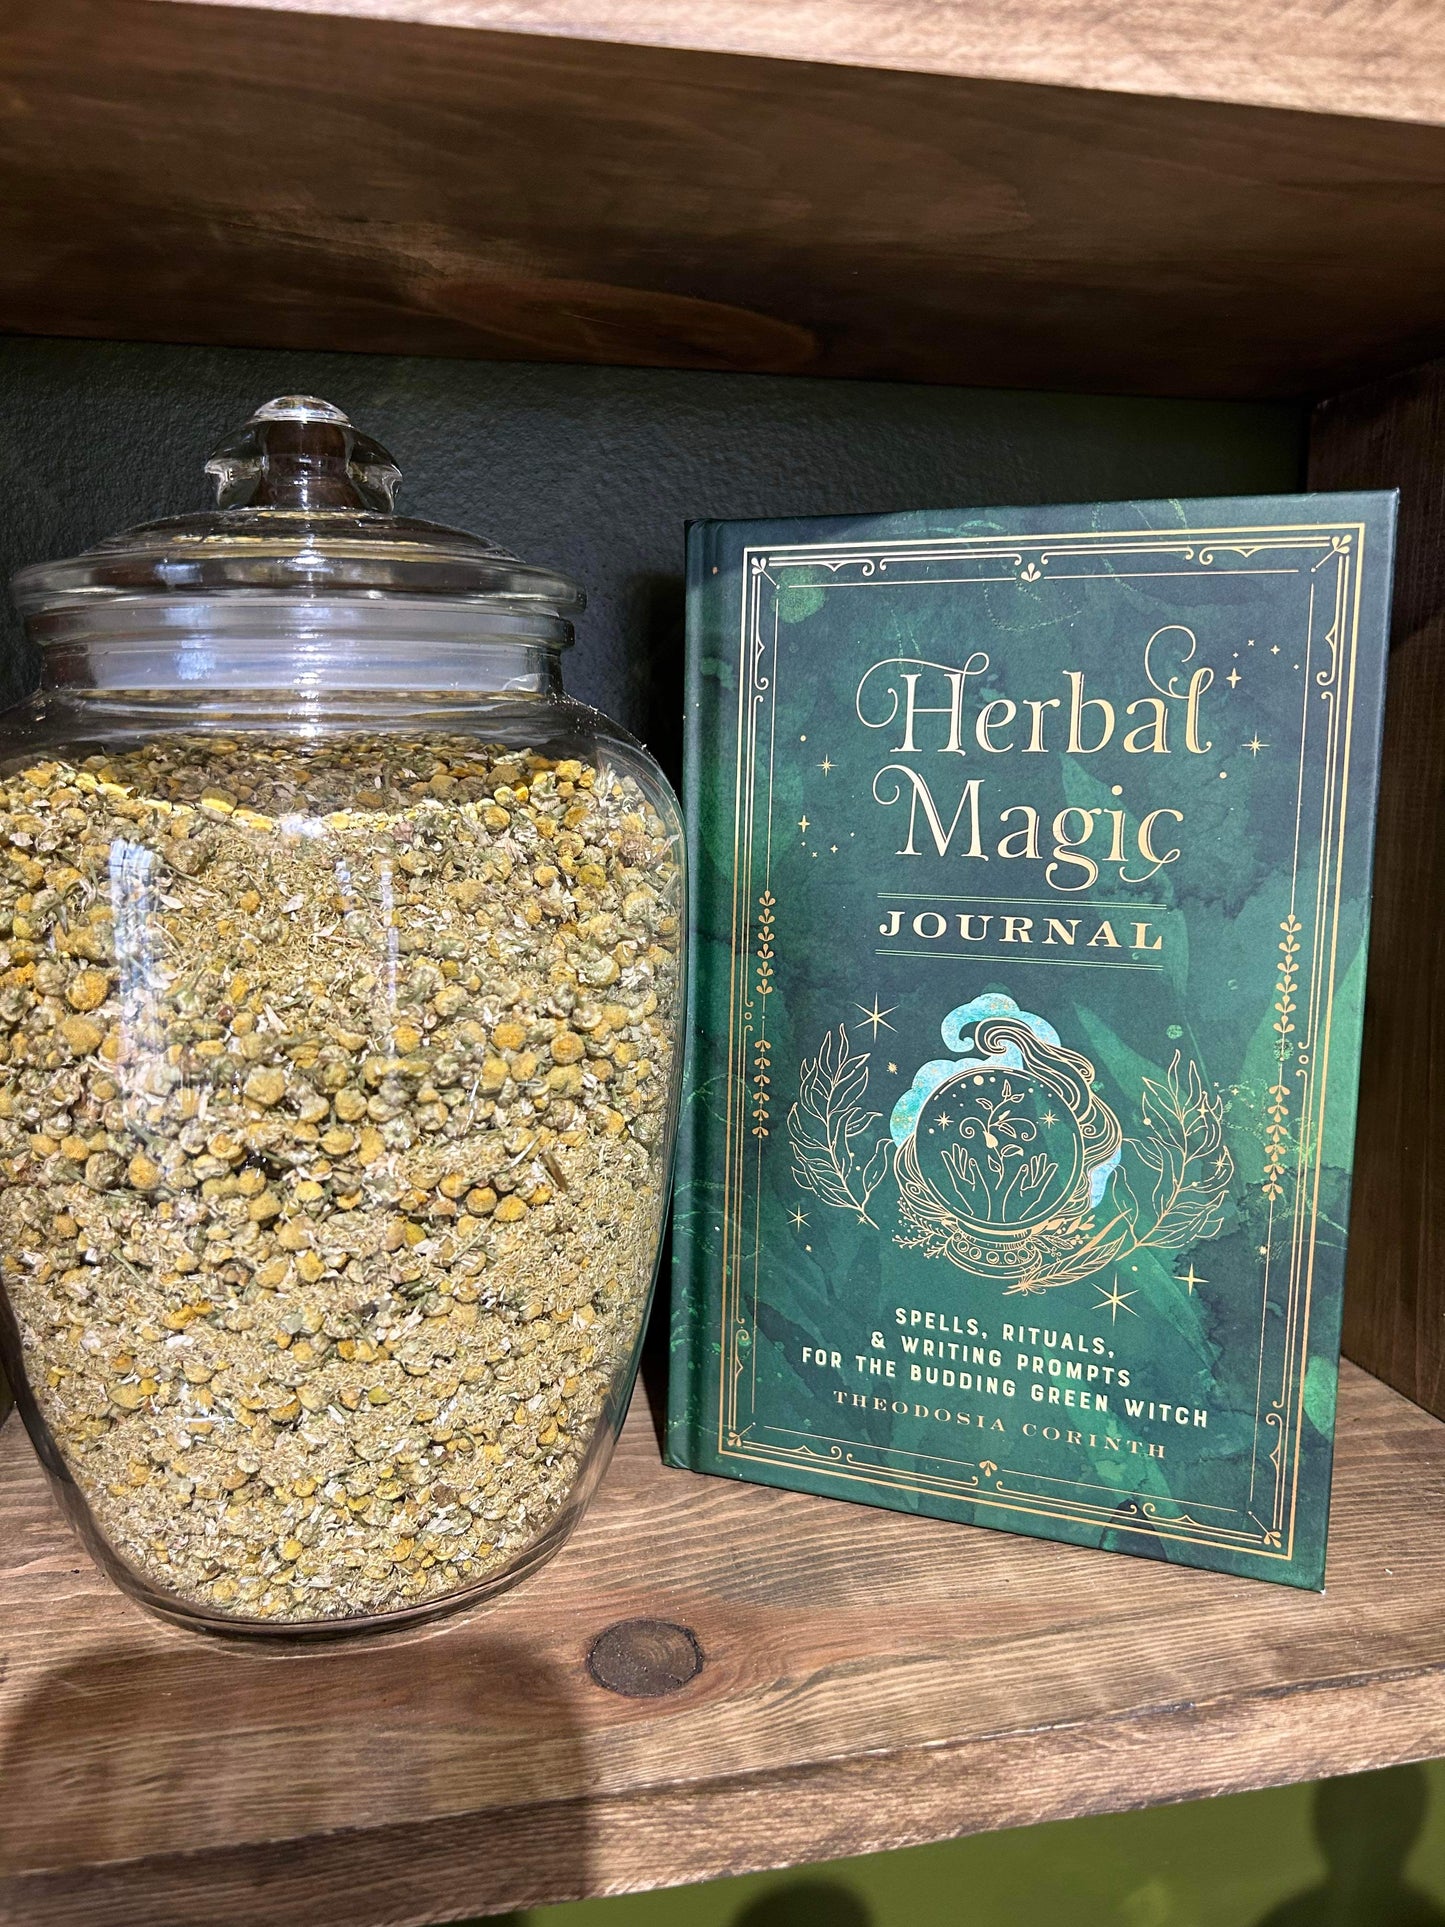 Herbal Magic Journal by Theodosia Corinth